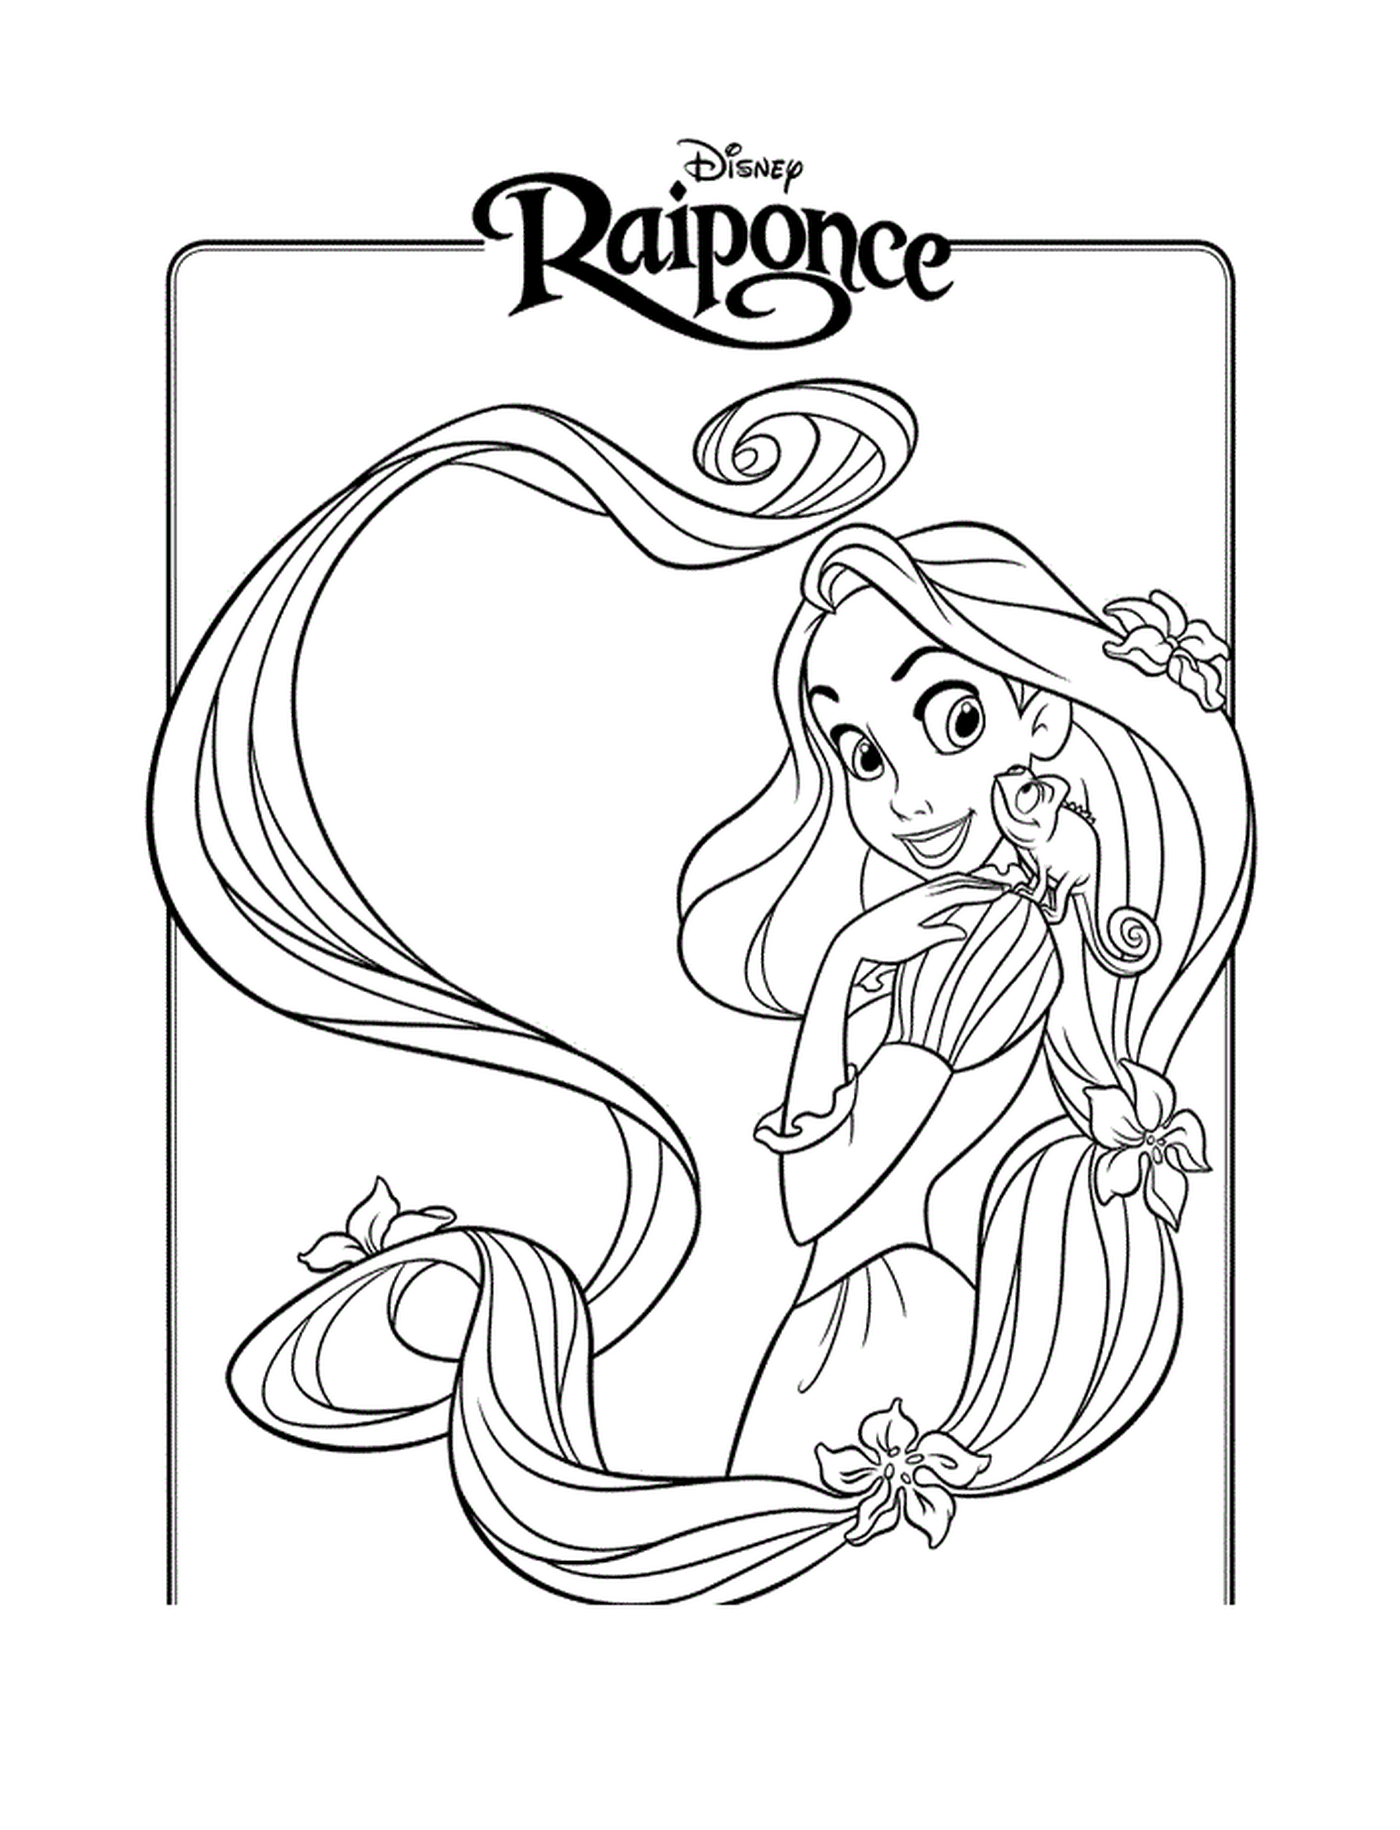  Raiponce Disney, a young girl with long hair 